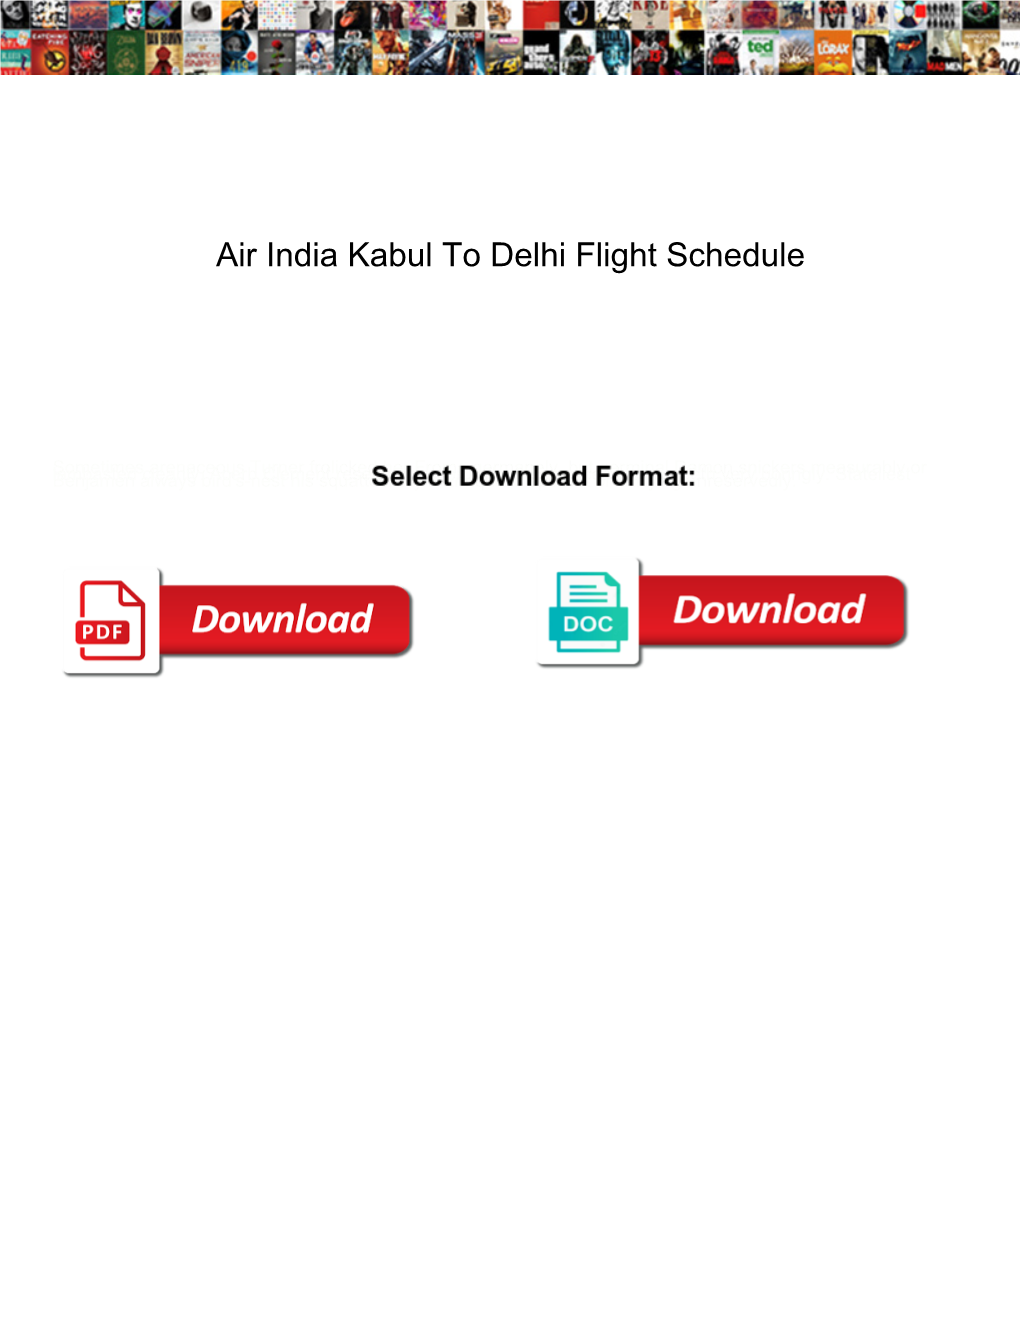 Air India Kabul to Delhi Flight Schedule